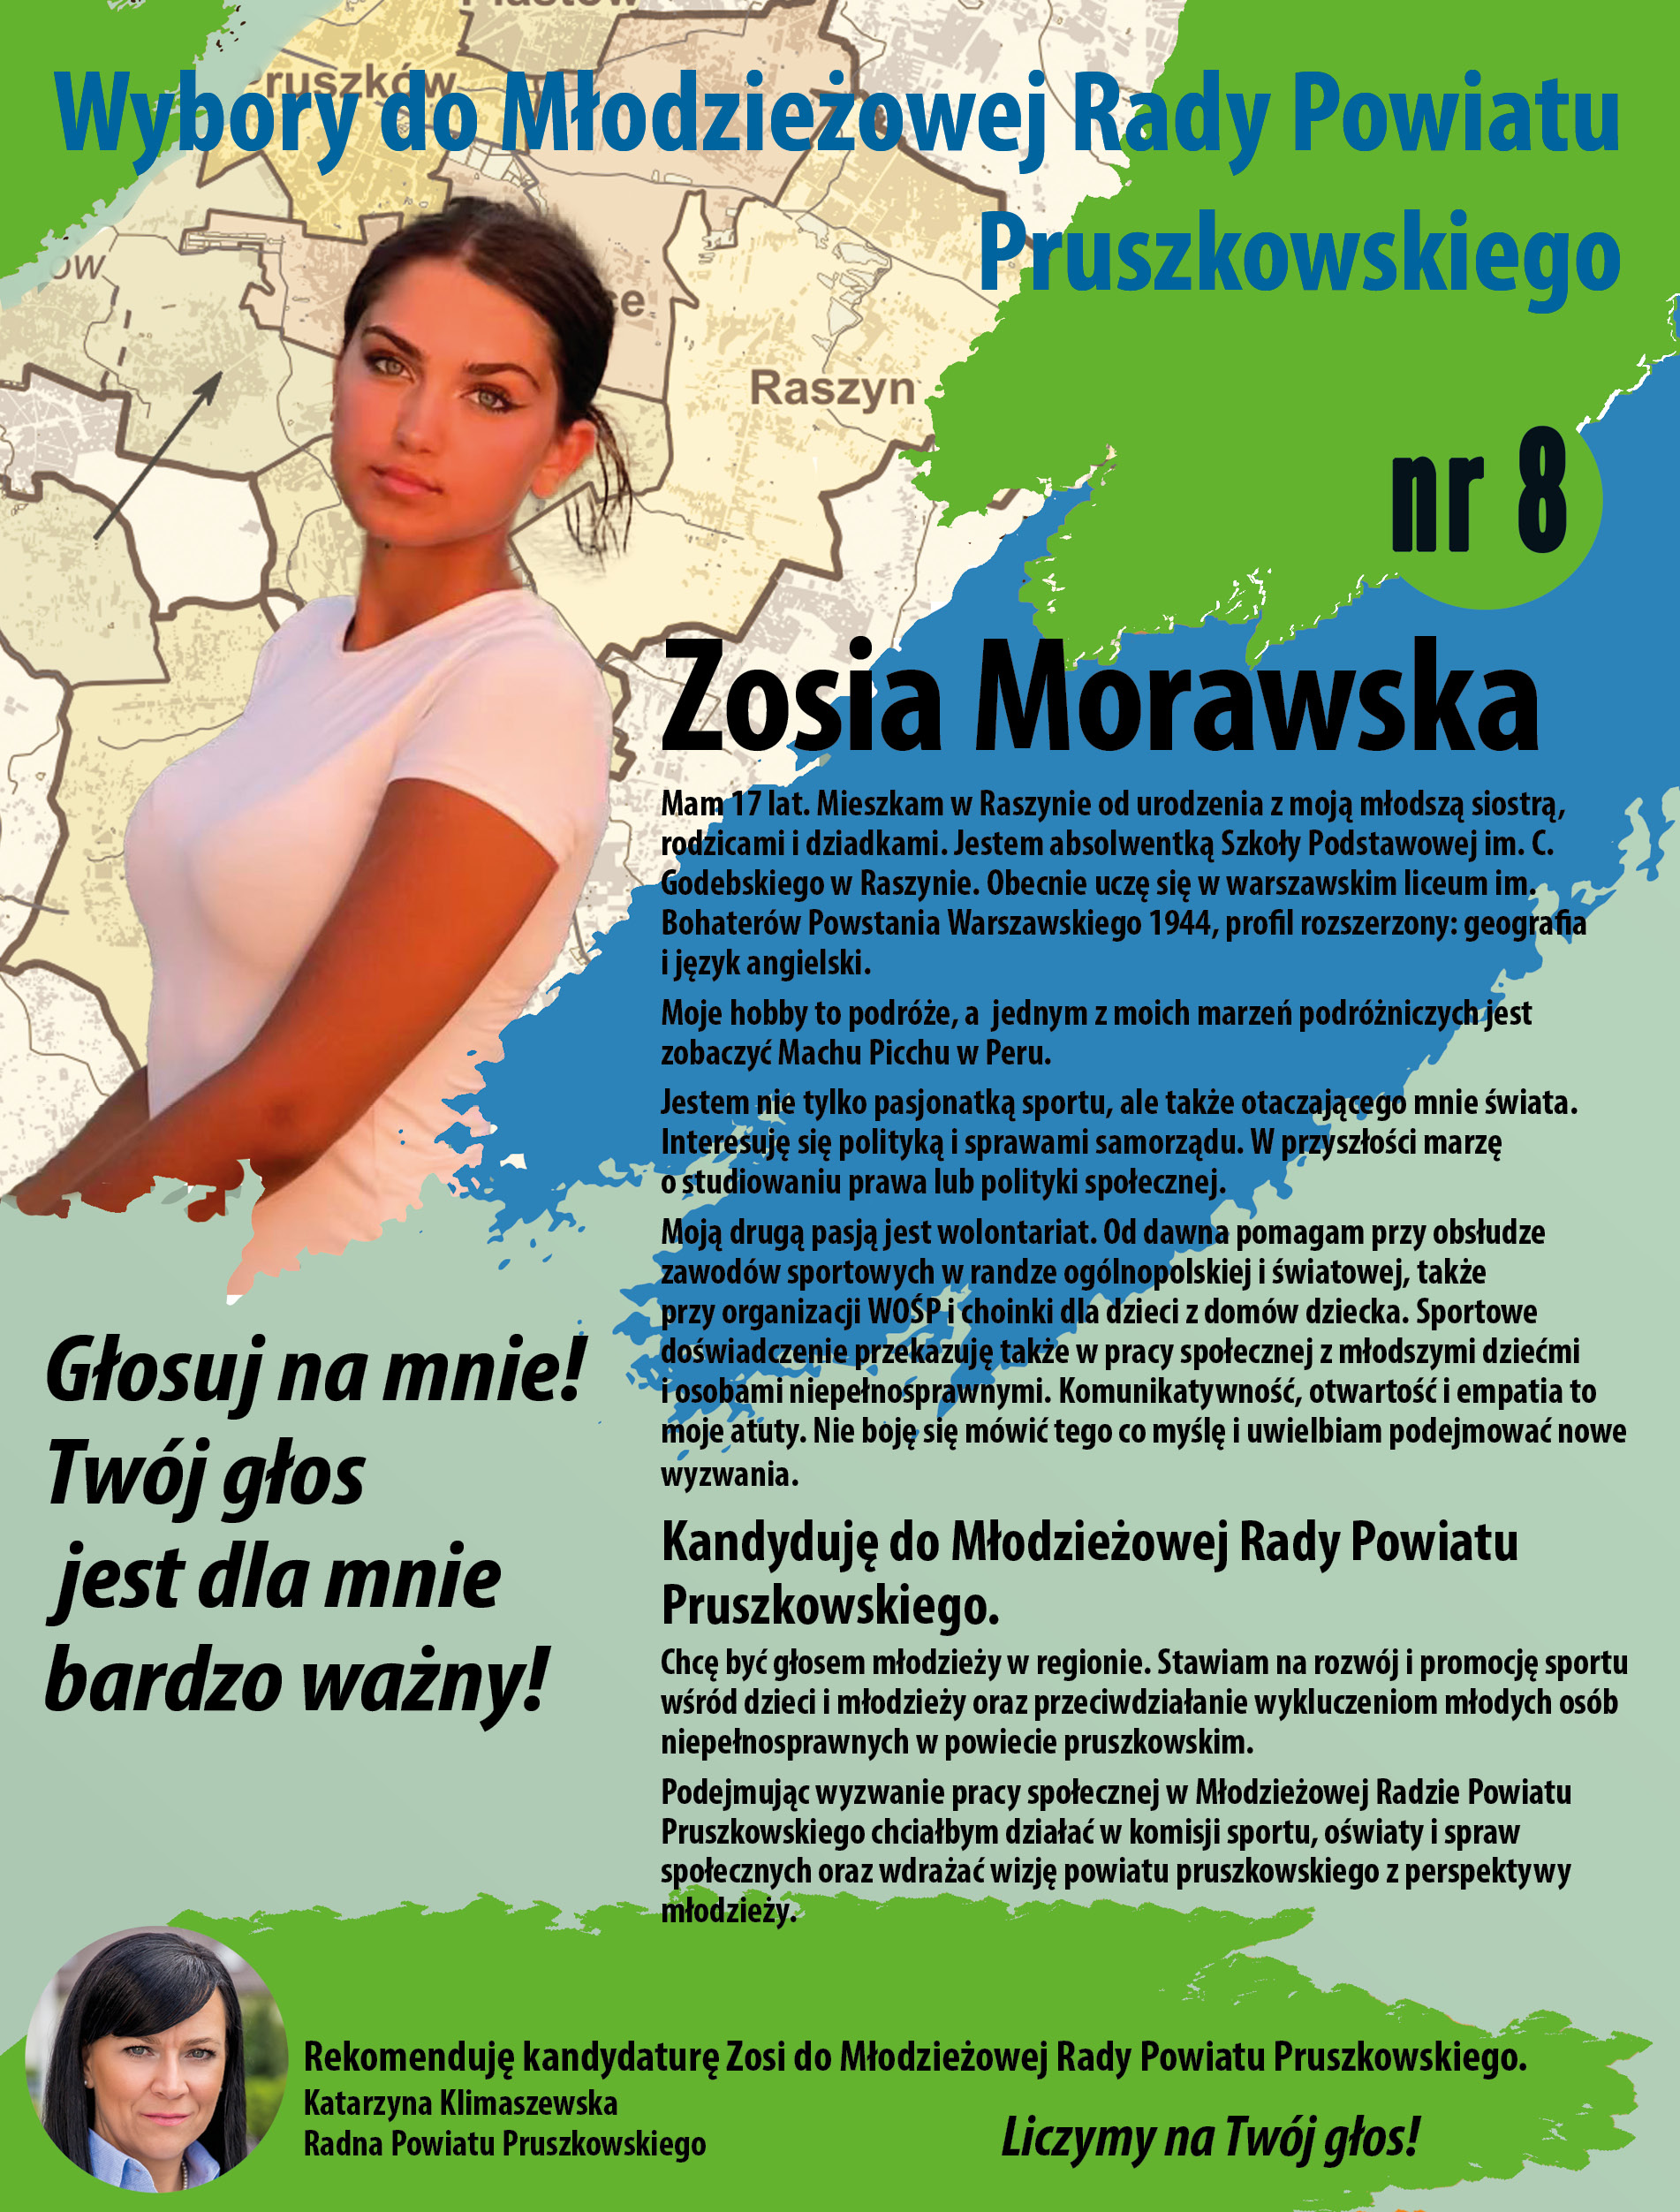 Zosia Morawska